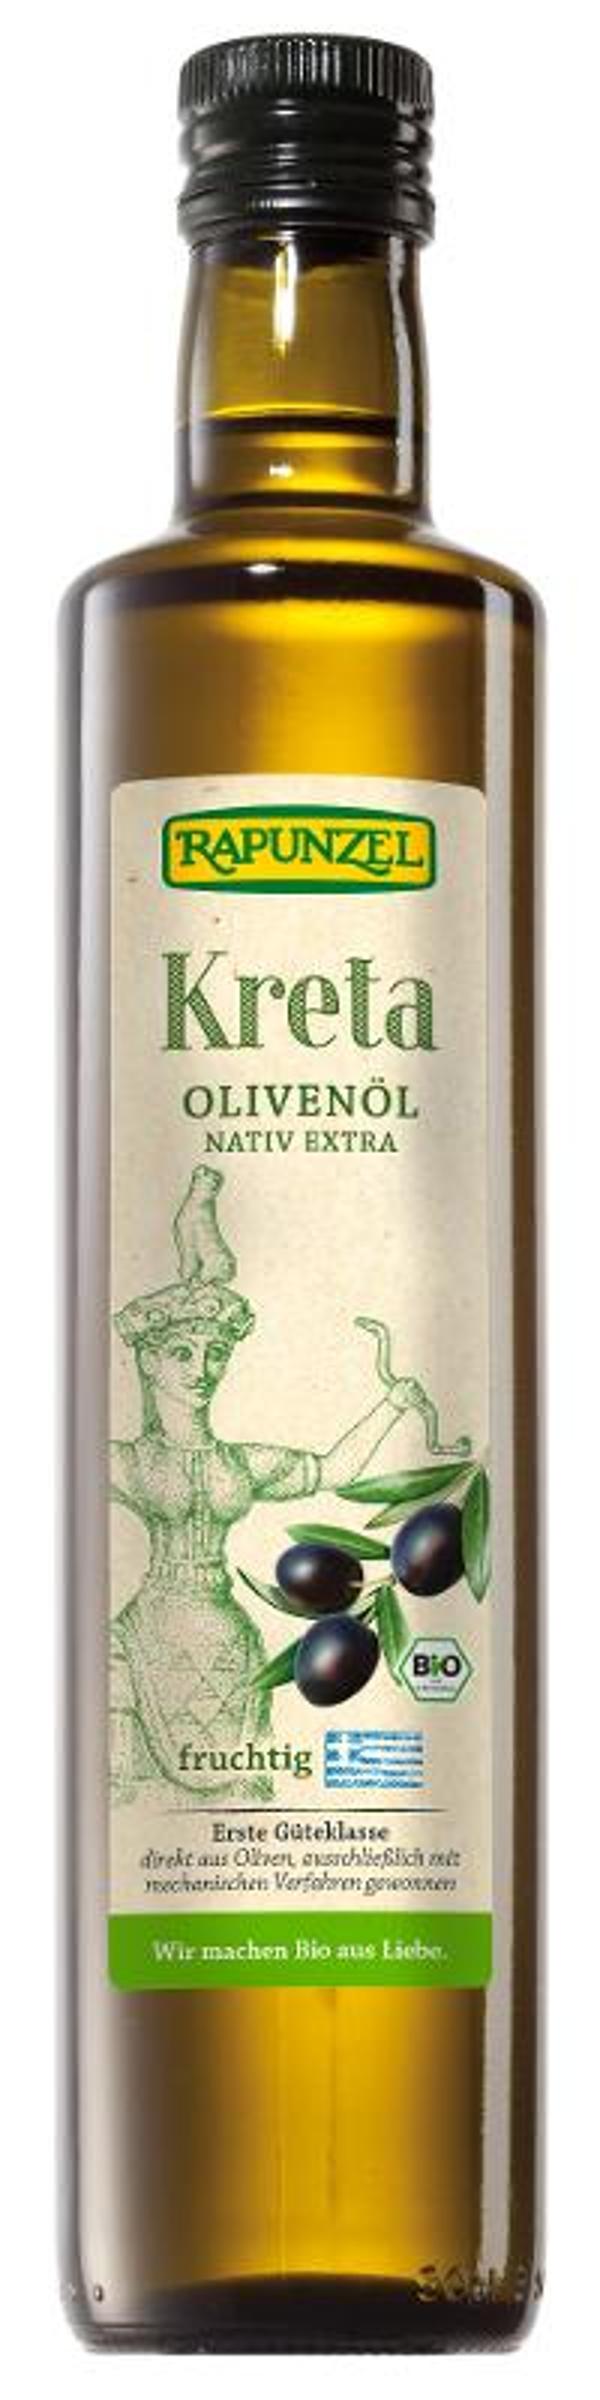 Produktfoto zu Olivenöl Kreta P.G.I. nativ extra 0,5 l Rapunzel